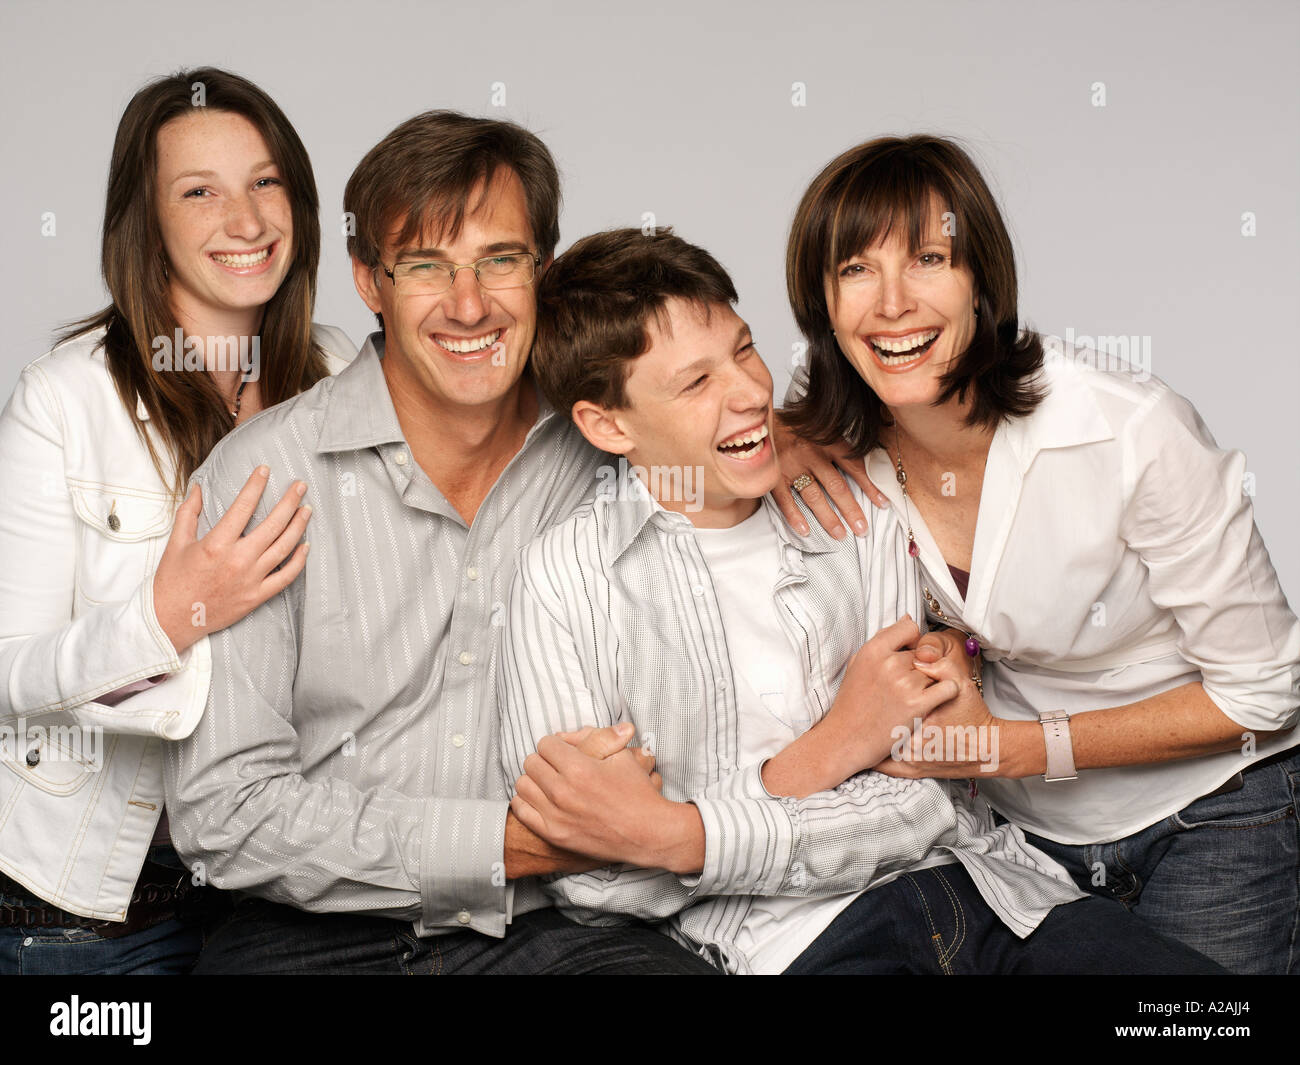 Family portrait in studio Stock Photo